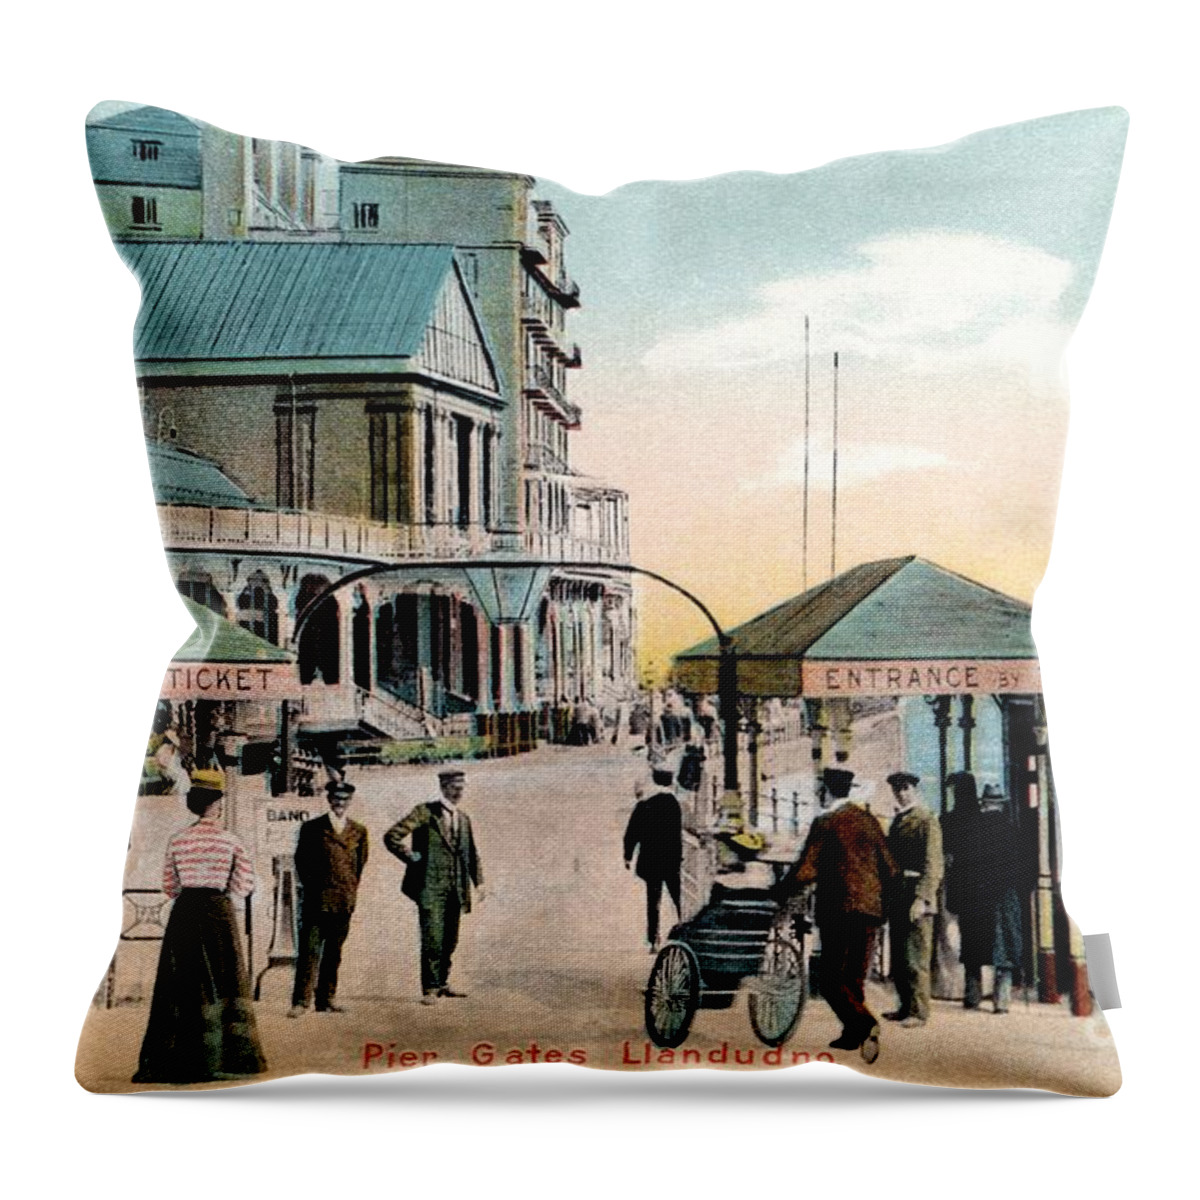 Vintage Throw Pillow featuring the photograph Pier Gates Llandudno Wales by Heidi De Leeuw